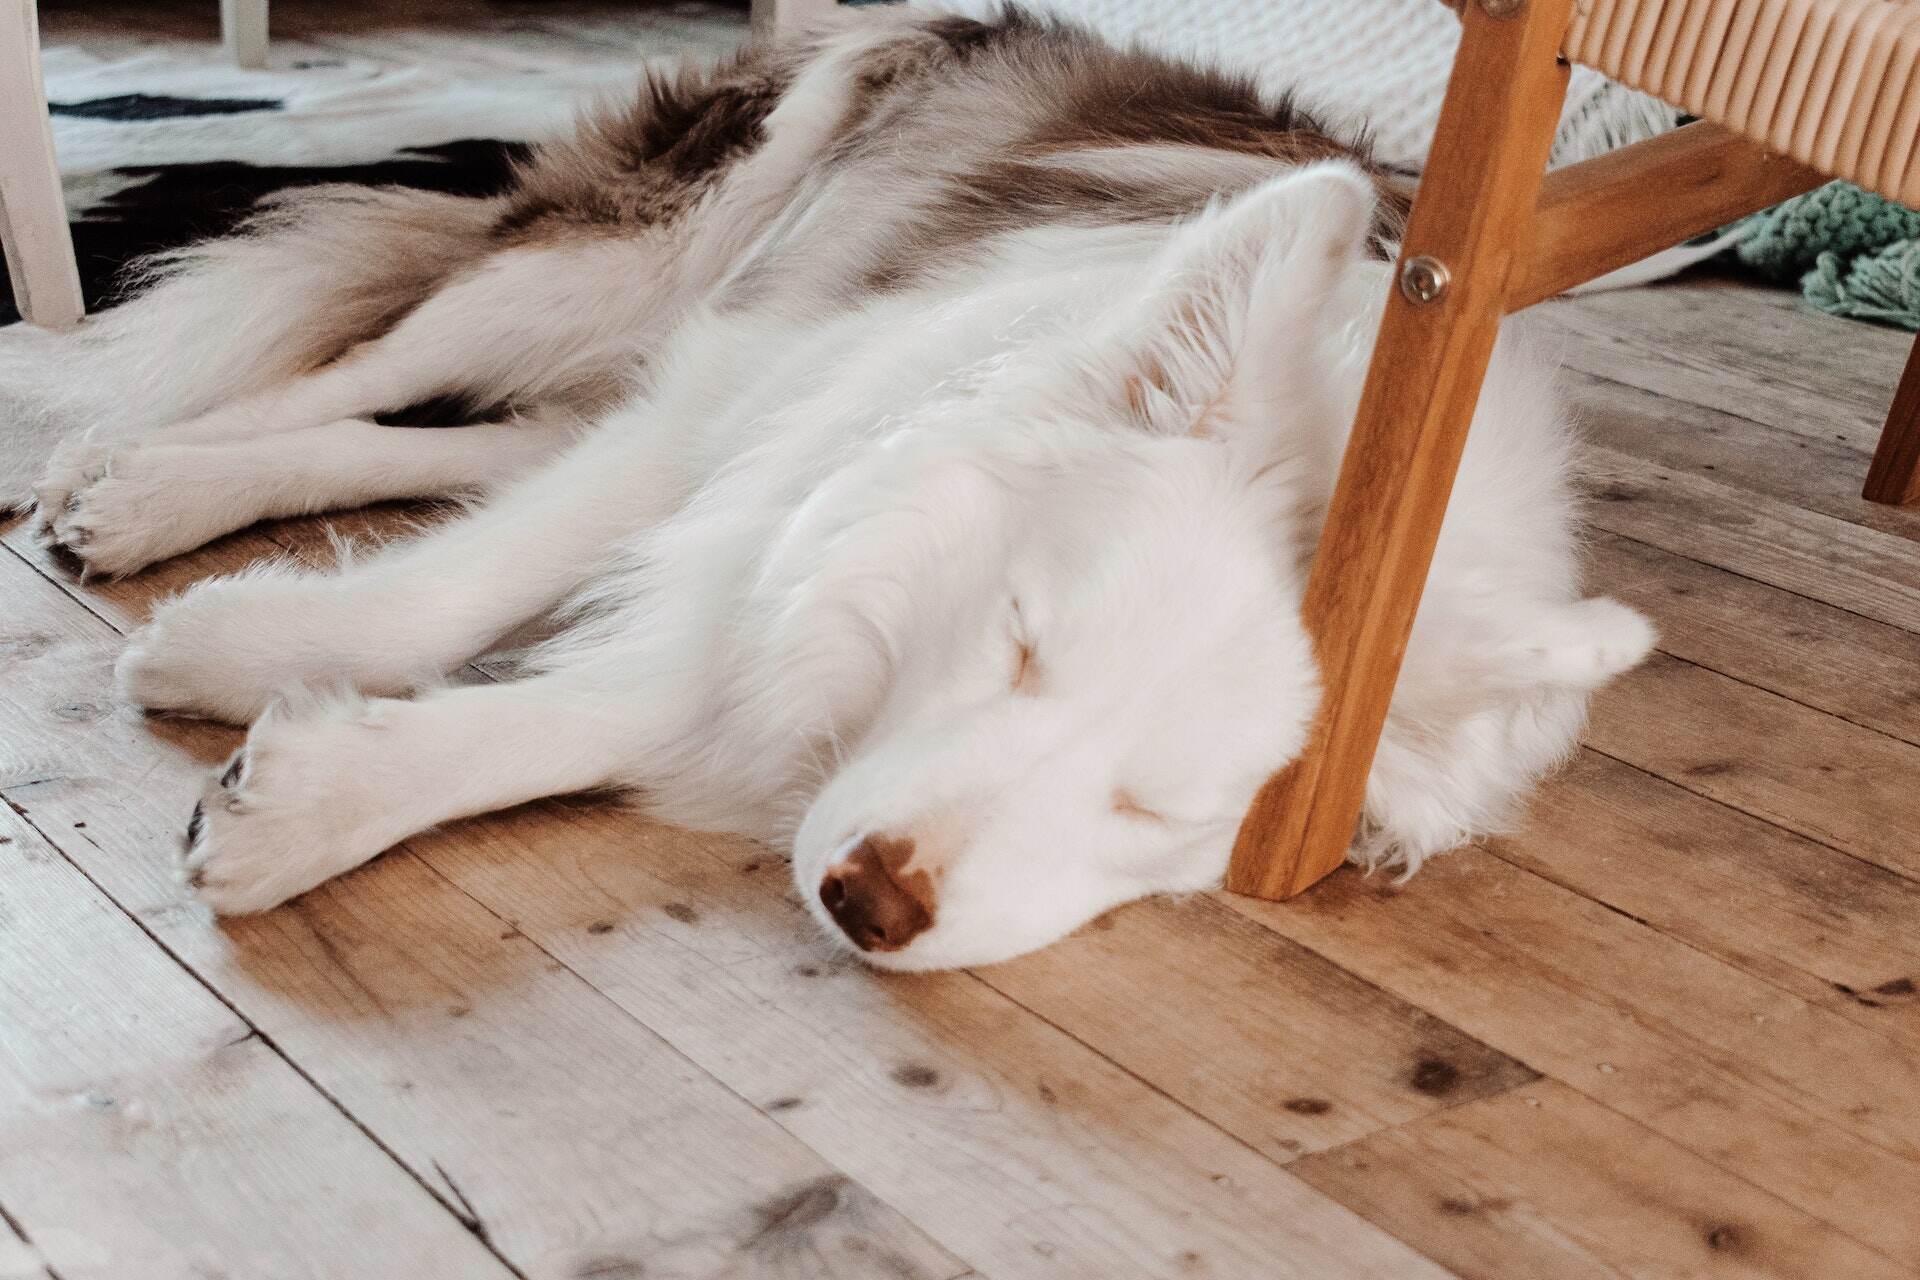 A dog sleeping under a chair on a wooden floor